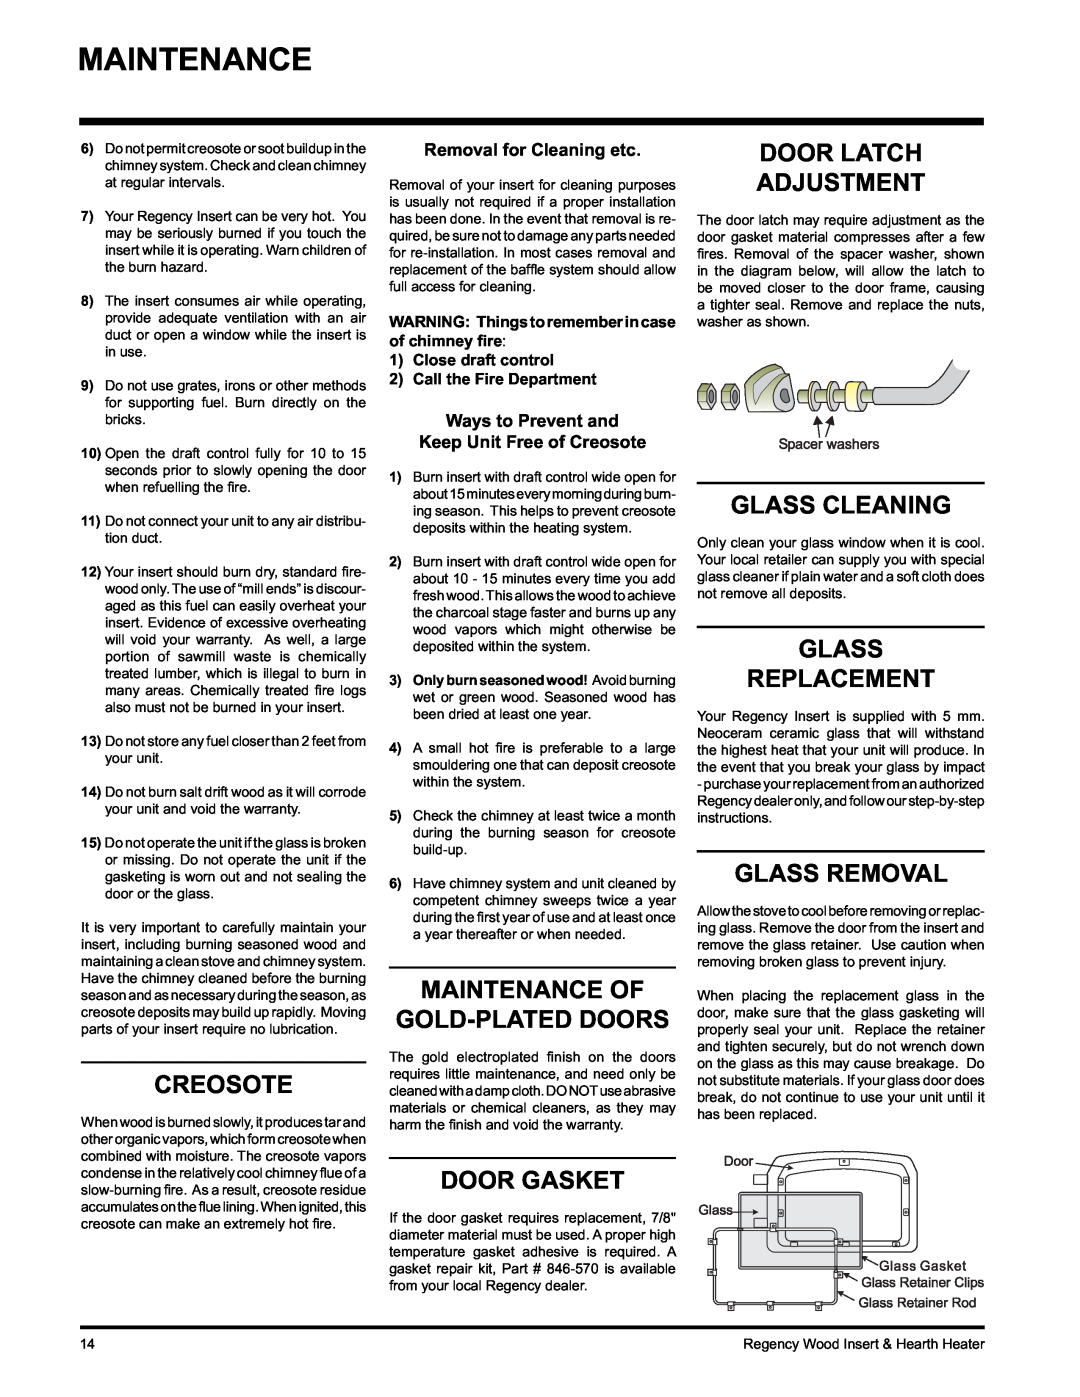 Regency I1100S Door Latch Adjustment, Creosote, Maintenance Of Gold-Plateddoors, Glass Cleaning, Glass Replacement 